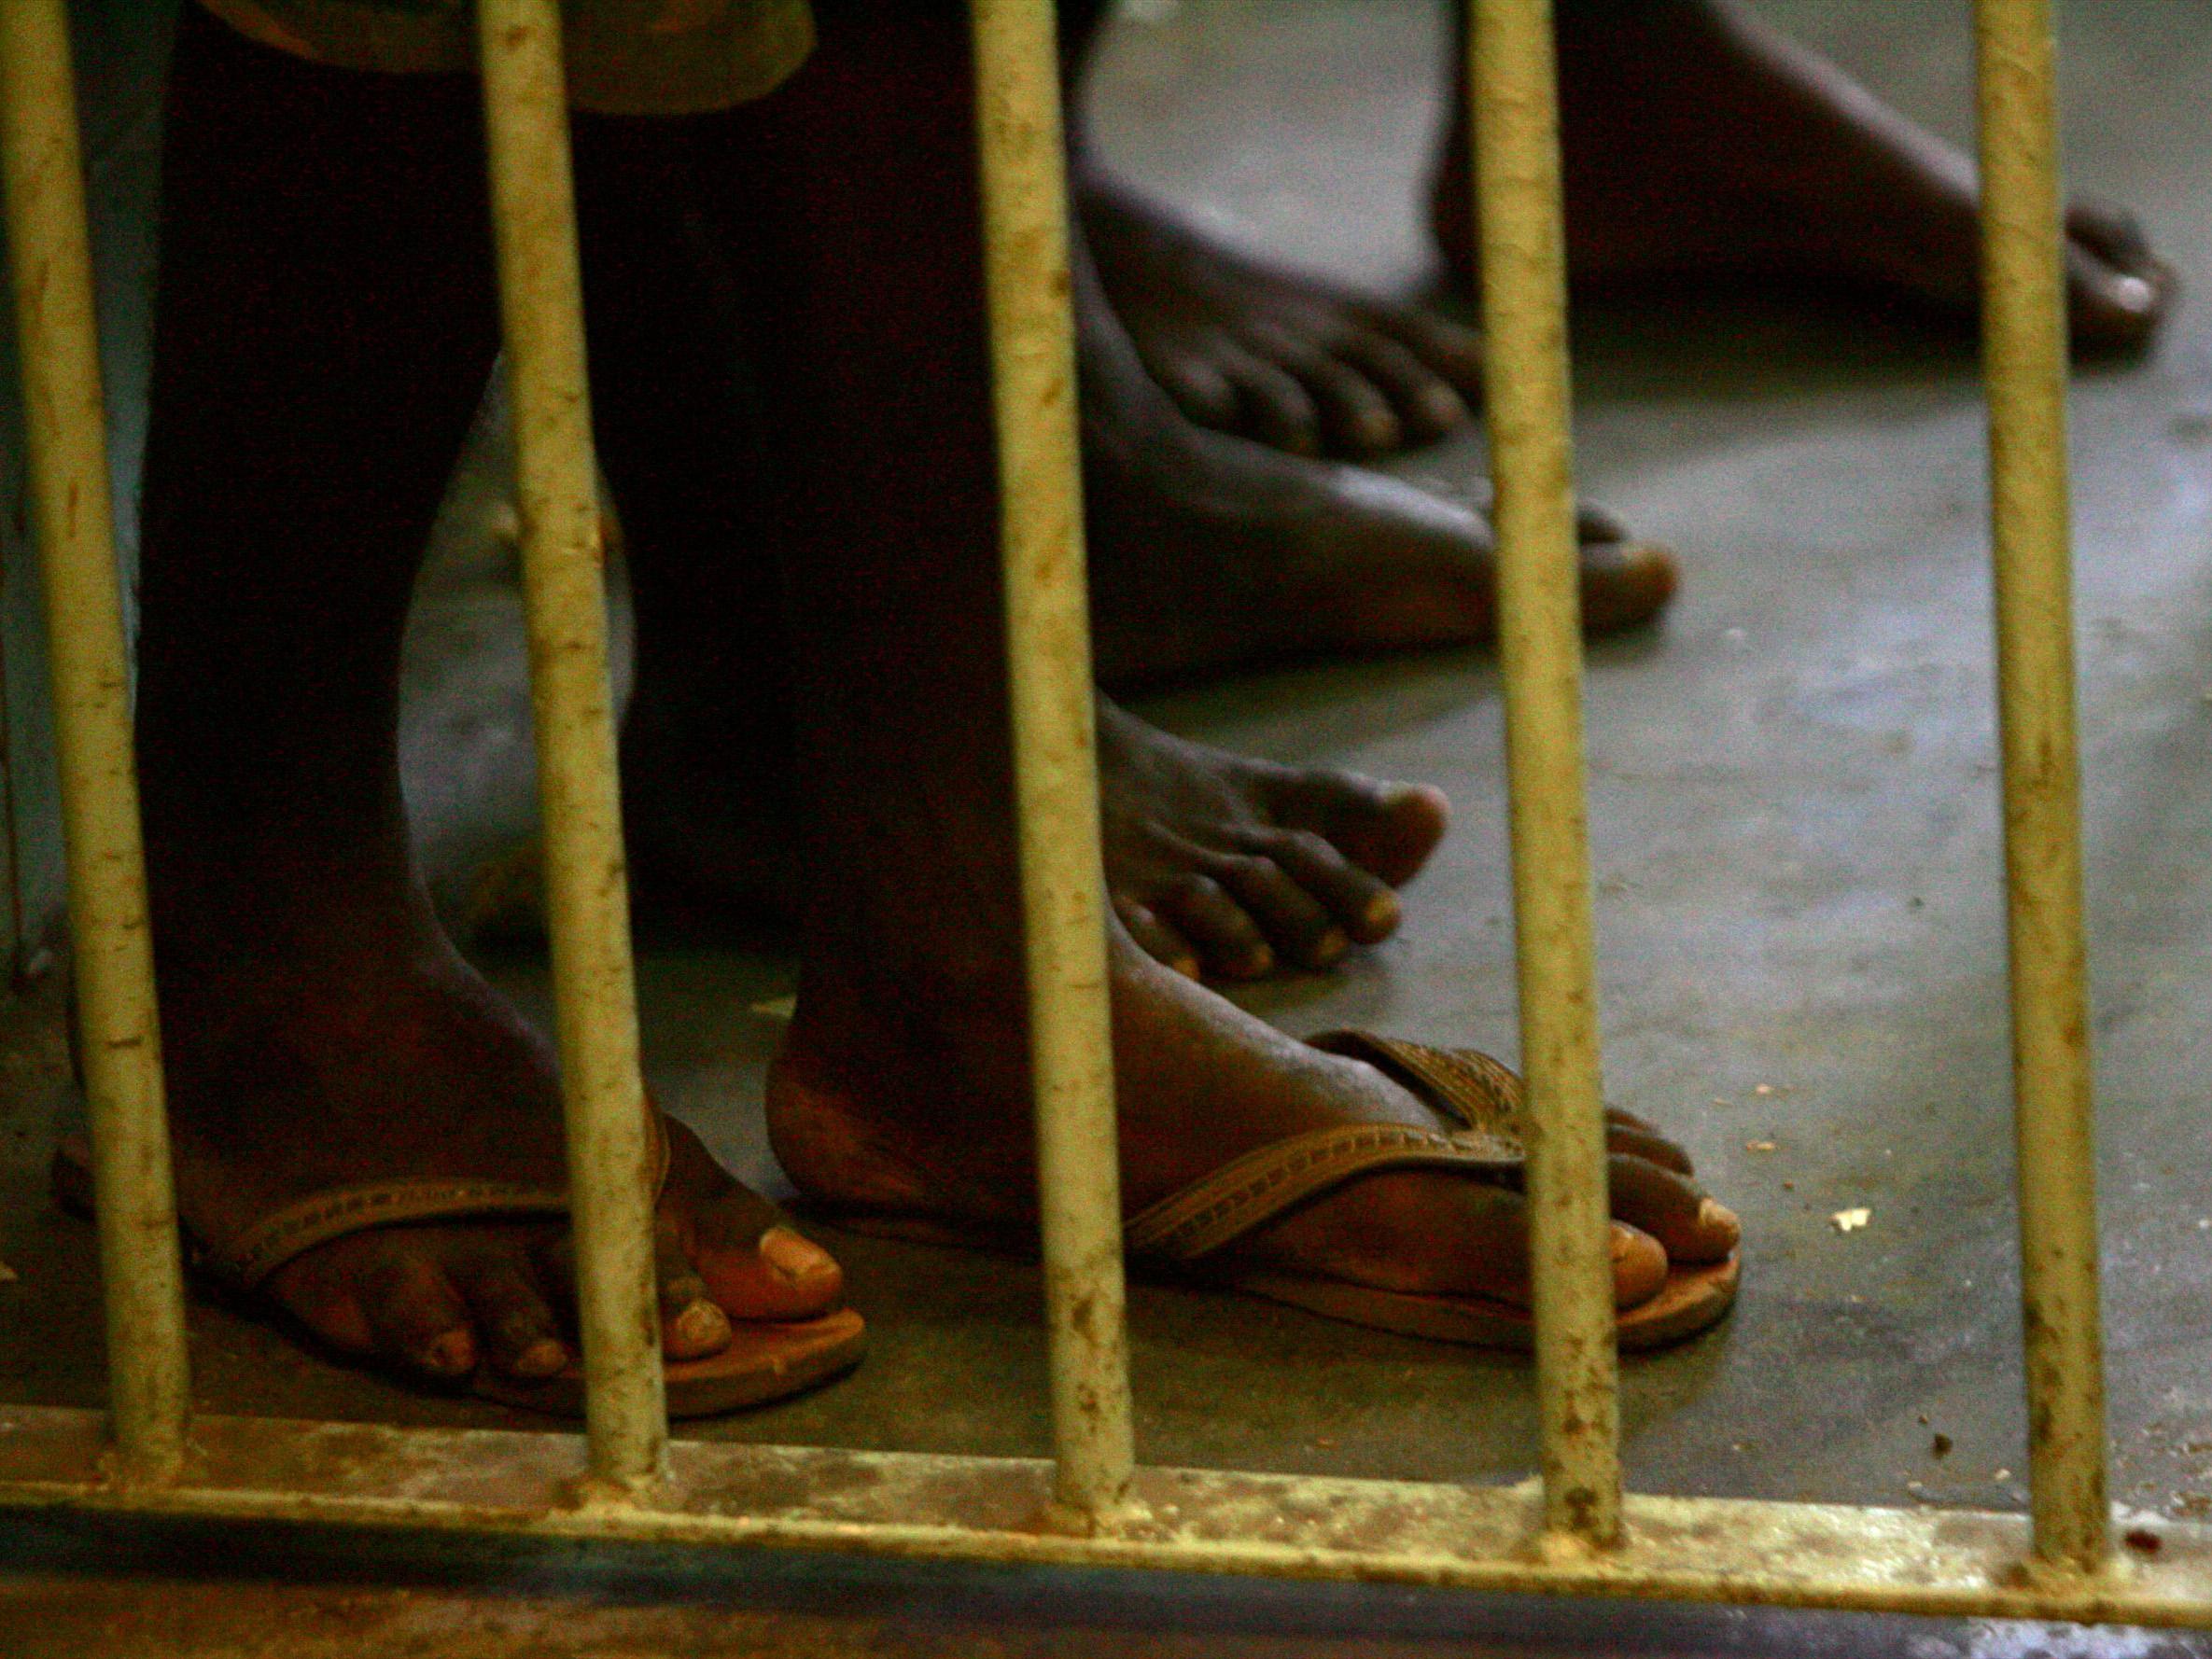 At least nine killed in Guinea armed jail break - ministry